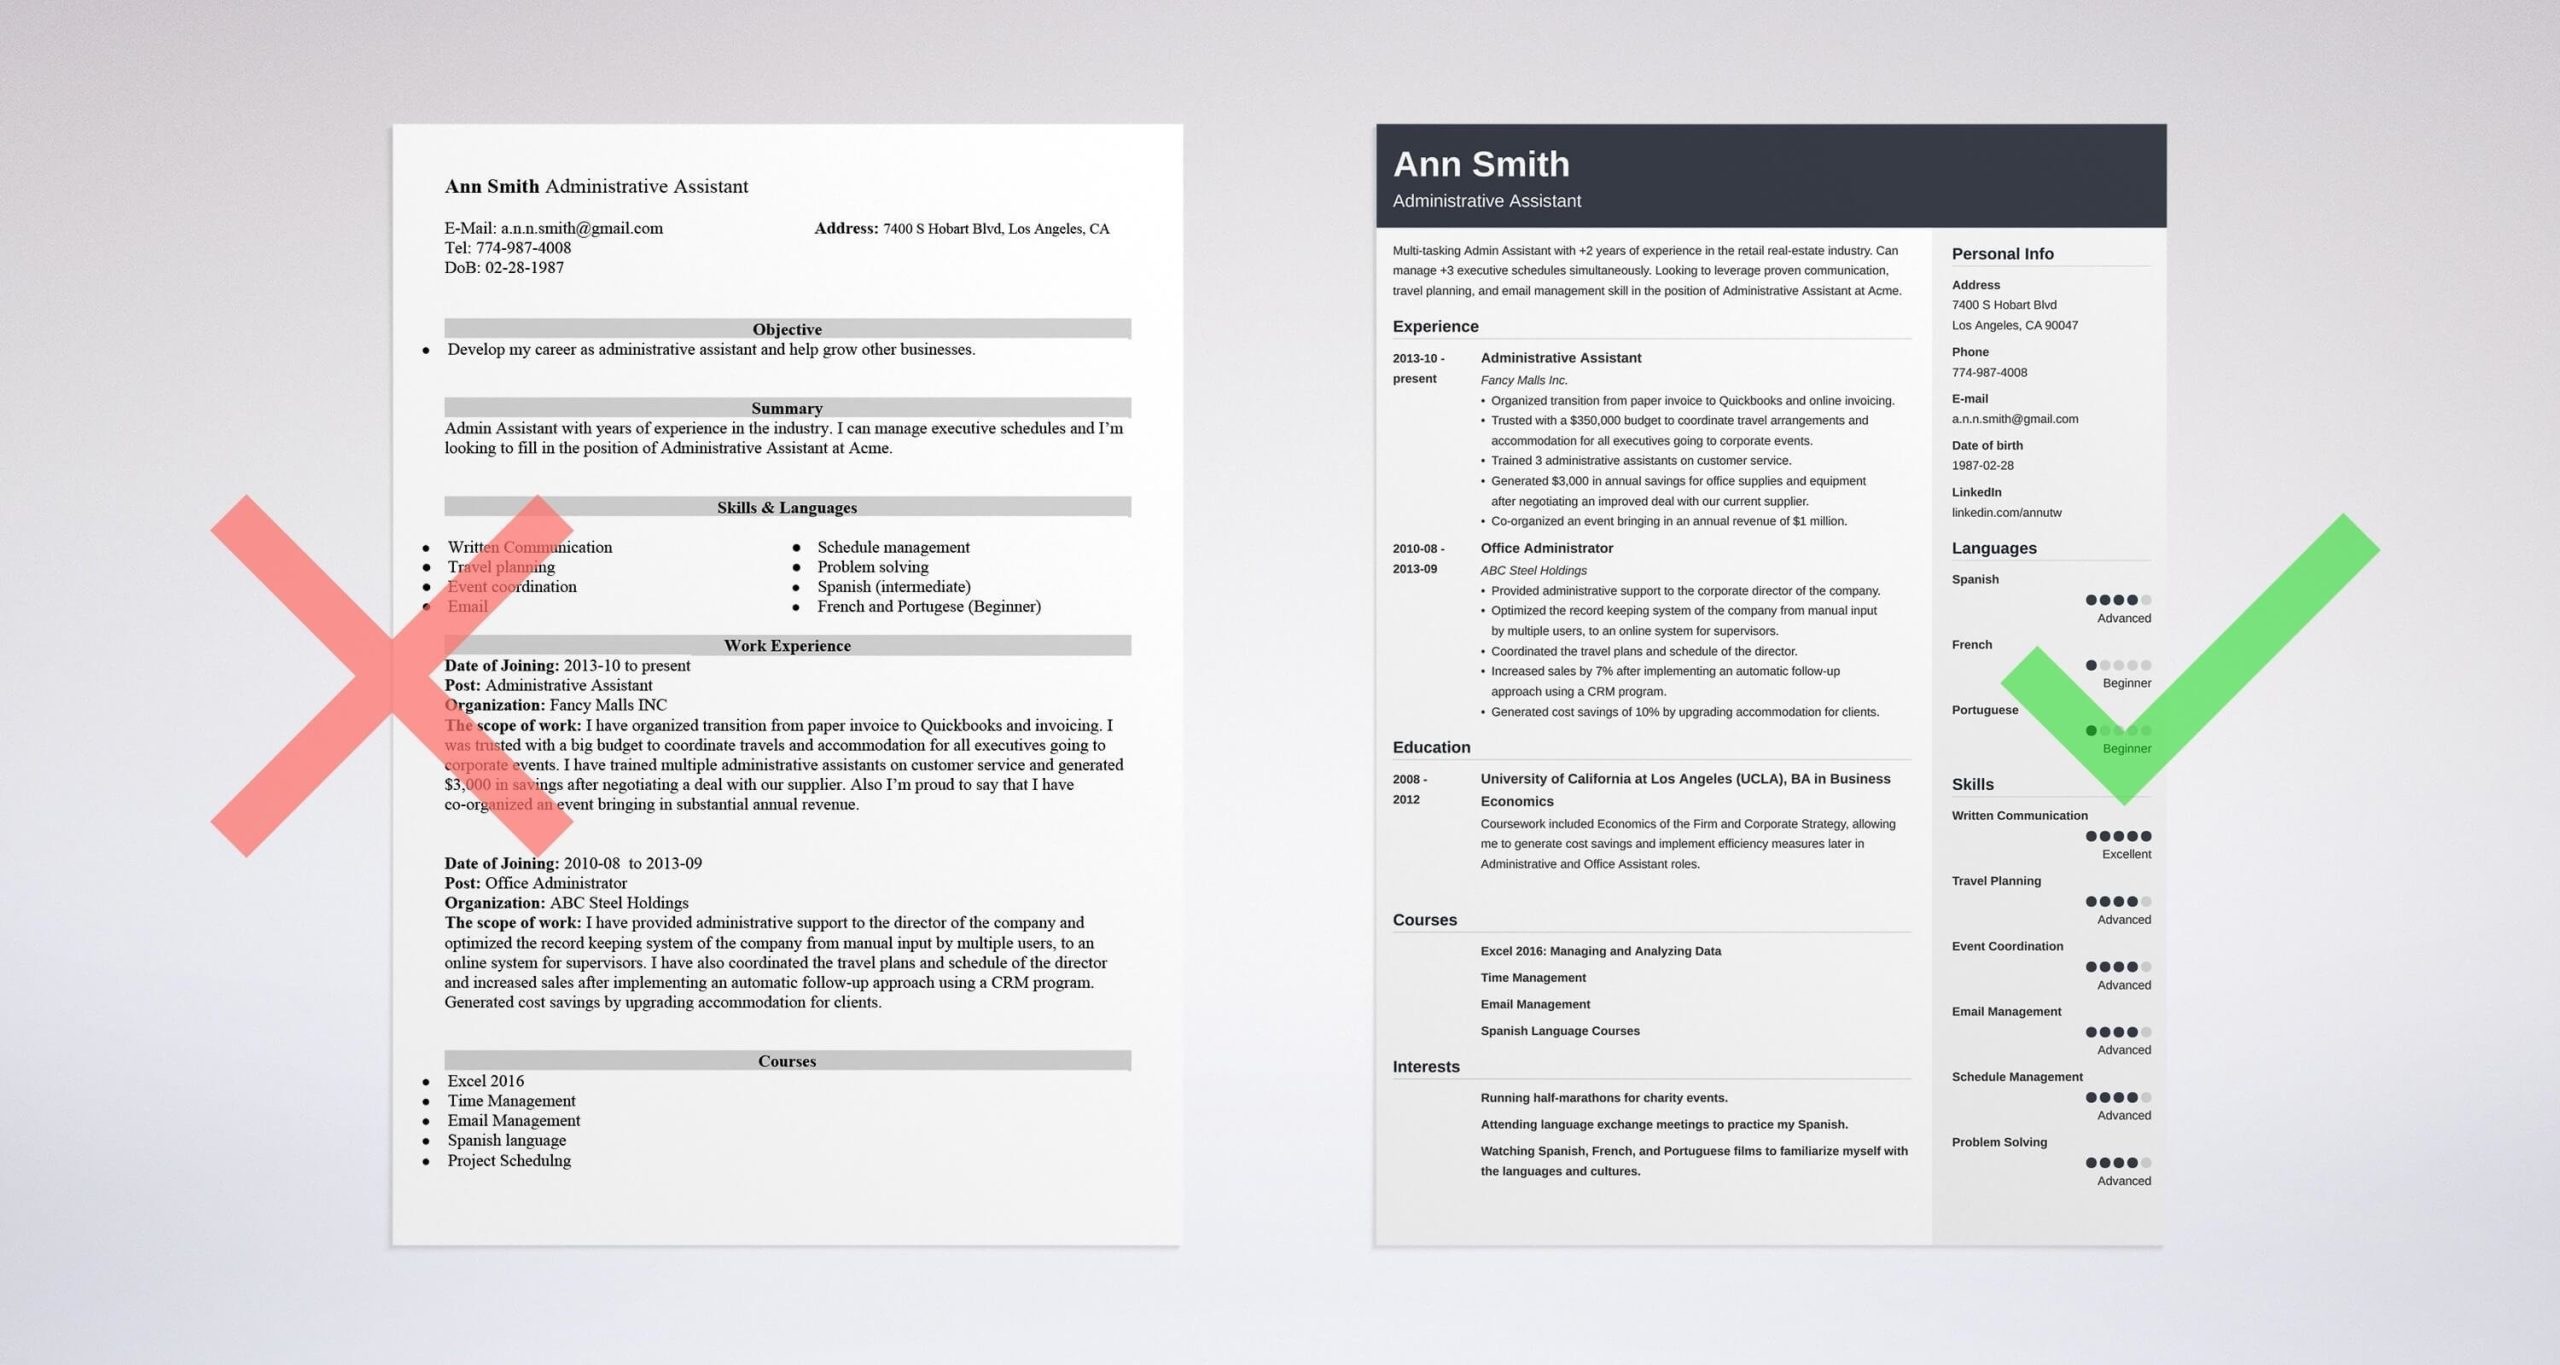 Sample Resume Profile for Administrative assistant Best Administrative assistant Resume Examples 2021